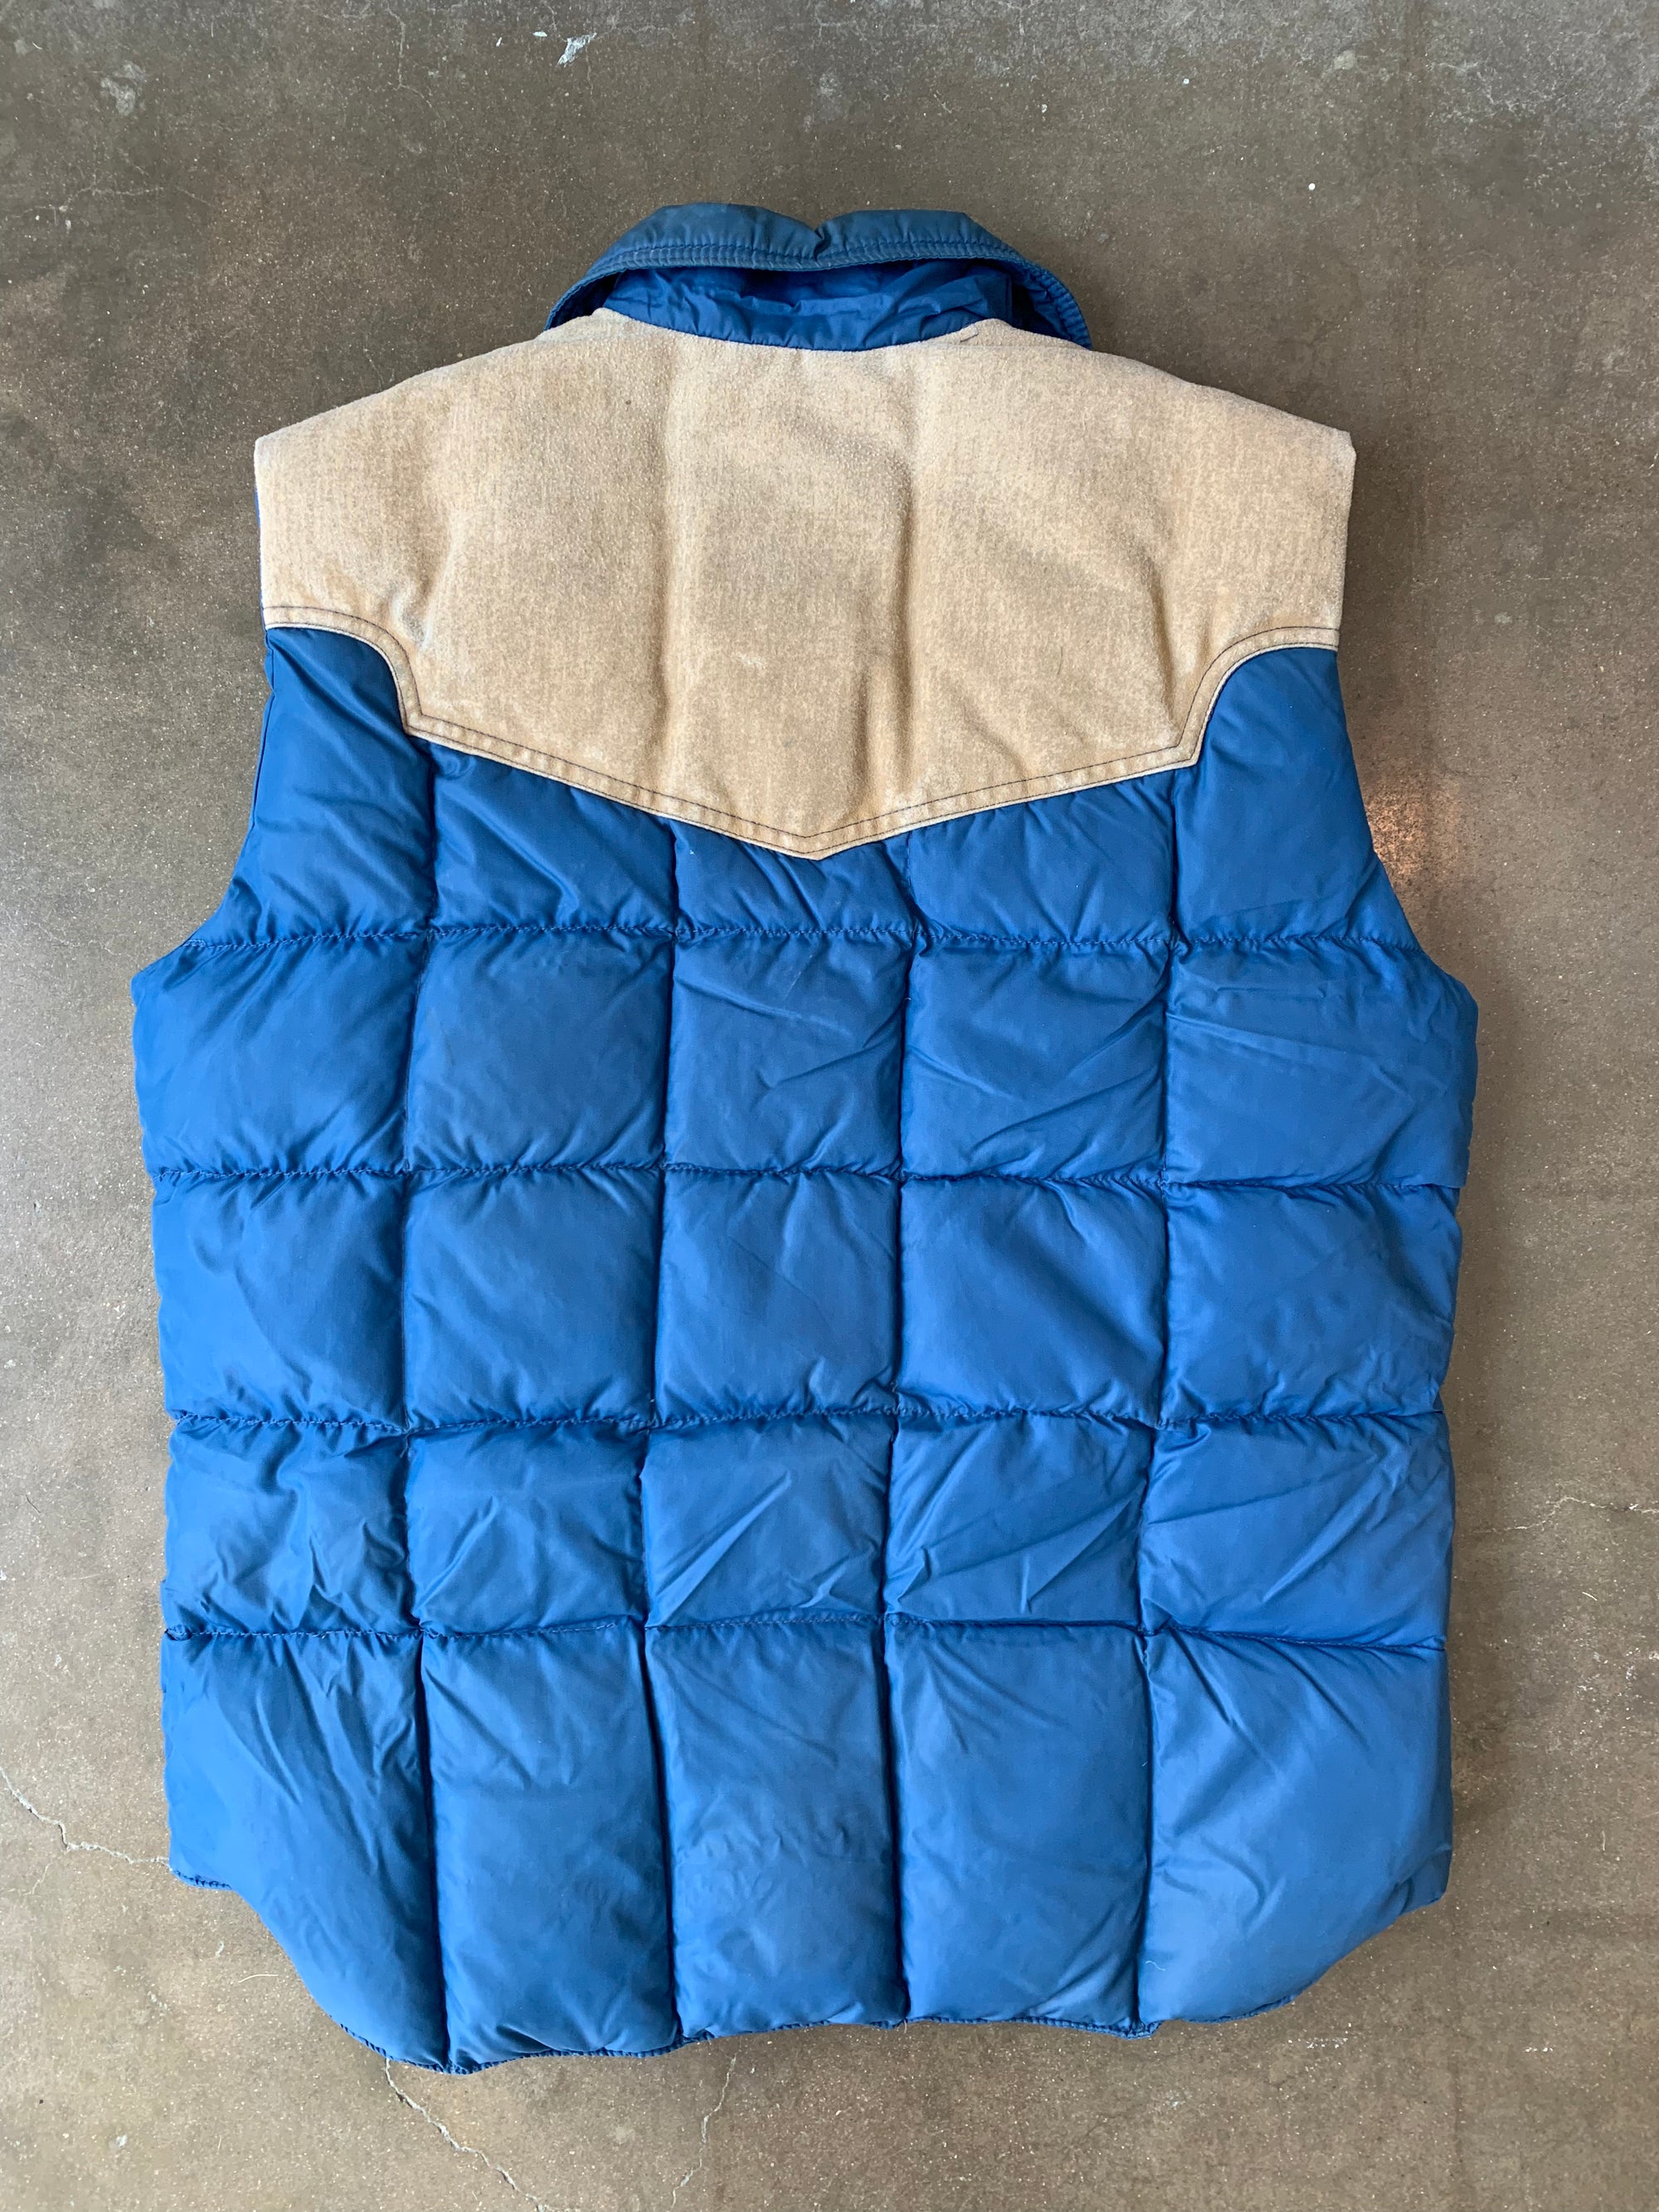 Vintage Tempco Goose Insulated Vest